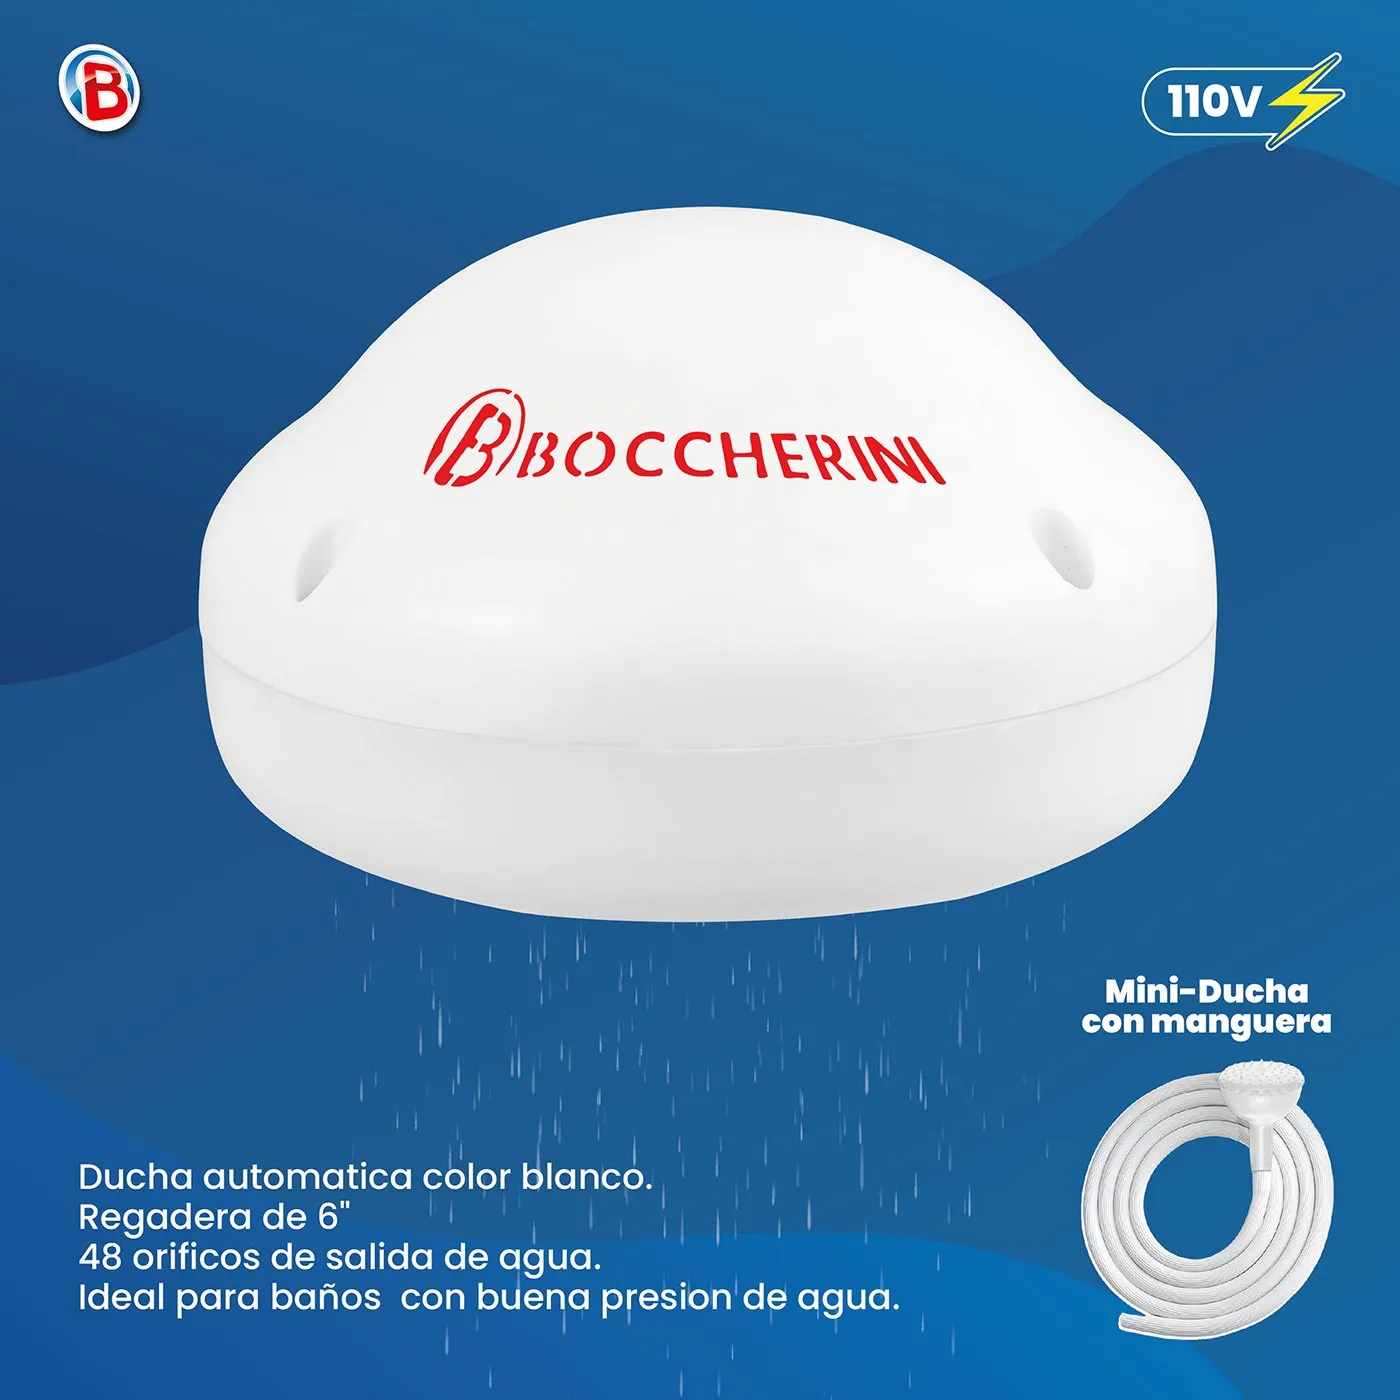 Ducha Electrica BOCCHERINI Premium Zent Blanca 120V con Manguera